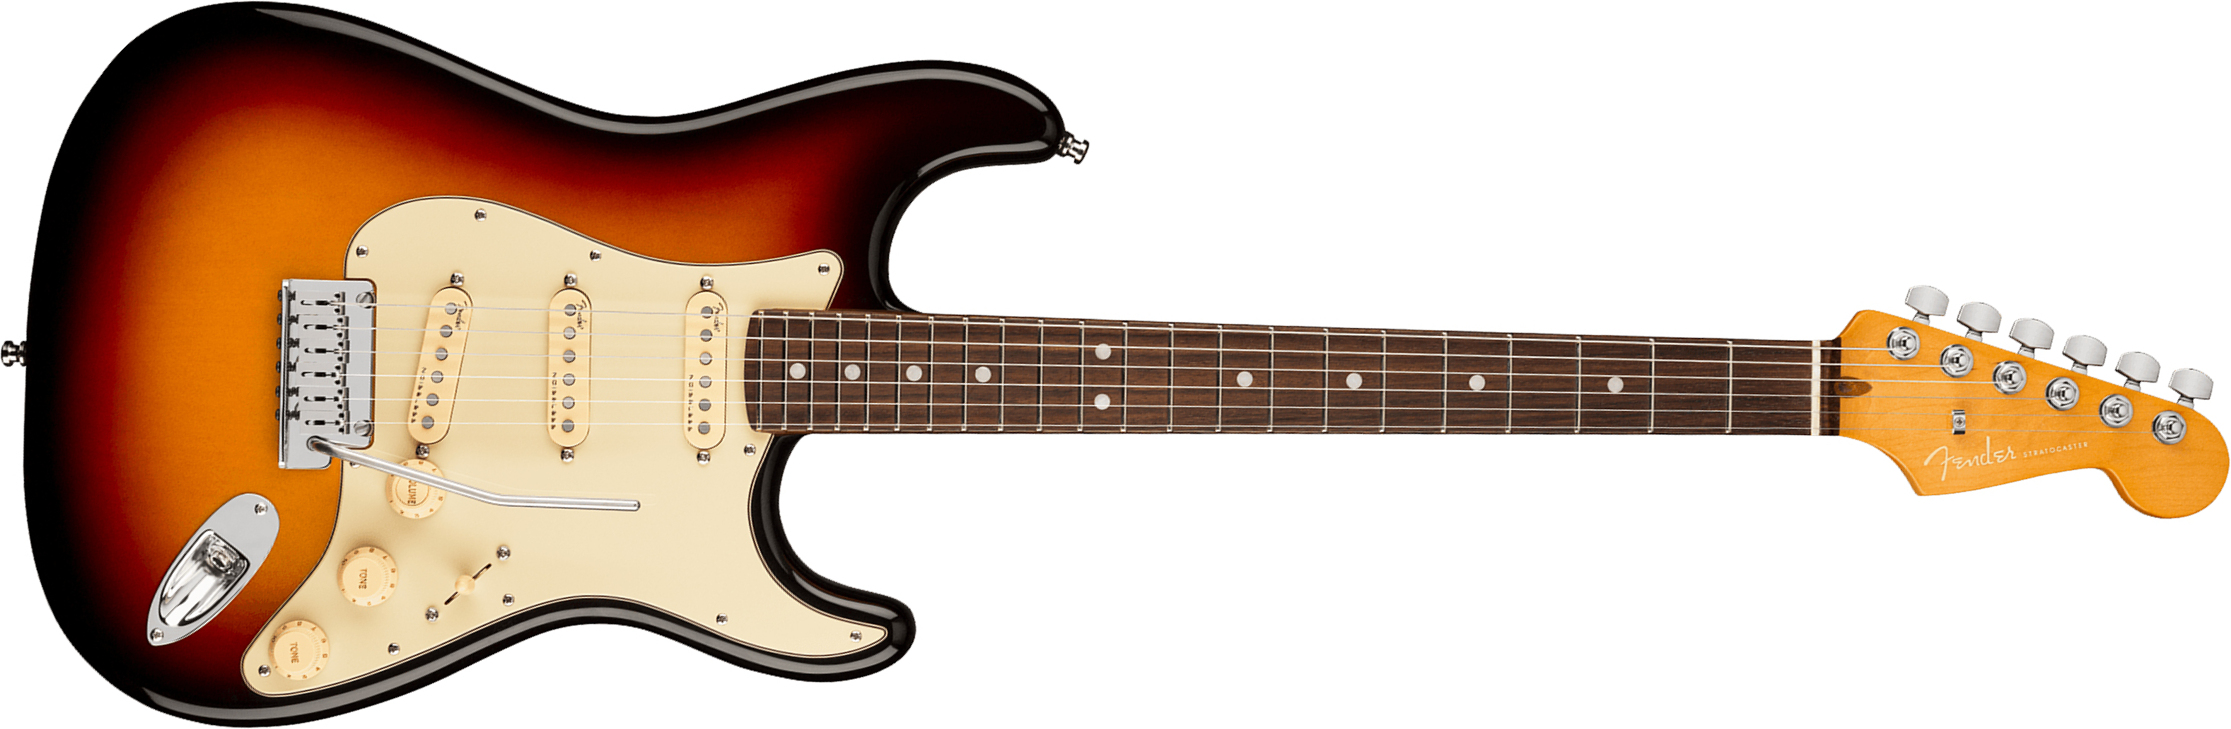 Fender Strat American Ultra 2019 Usa Rw - Ultraburst - Guitarra eléctrica con forma de str. - Main picture